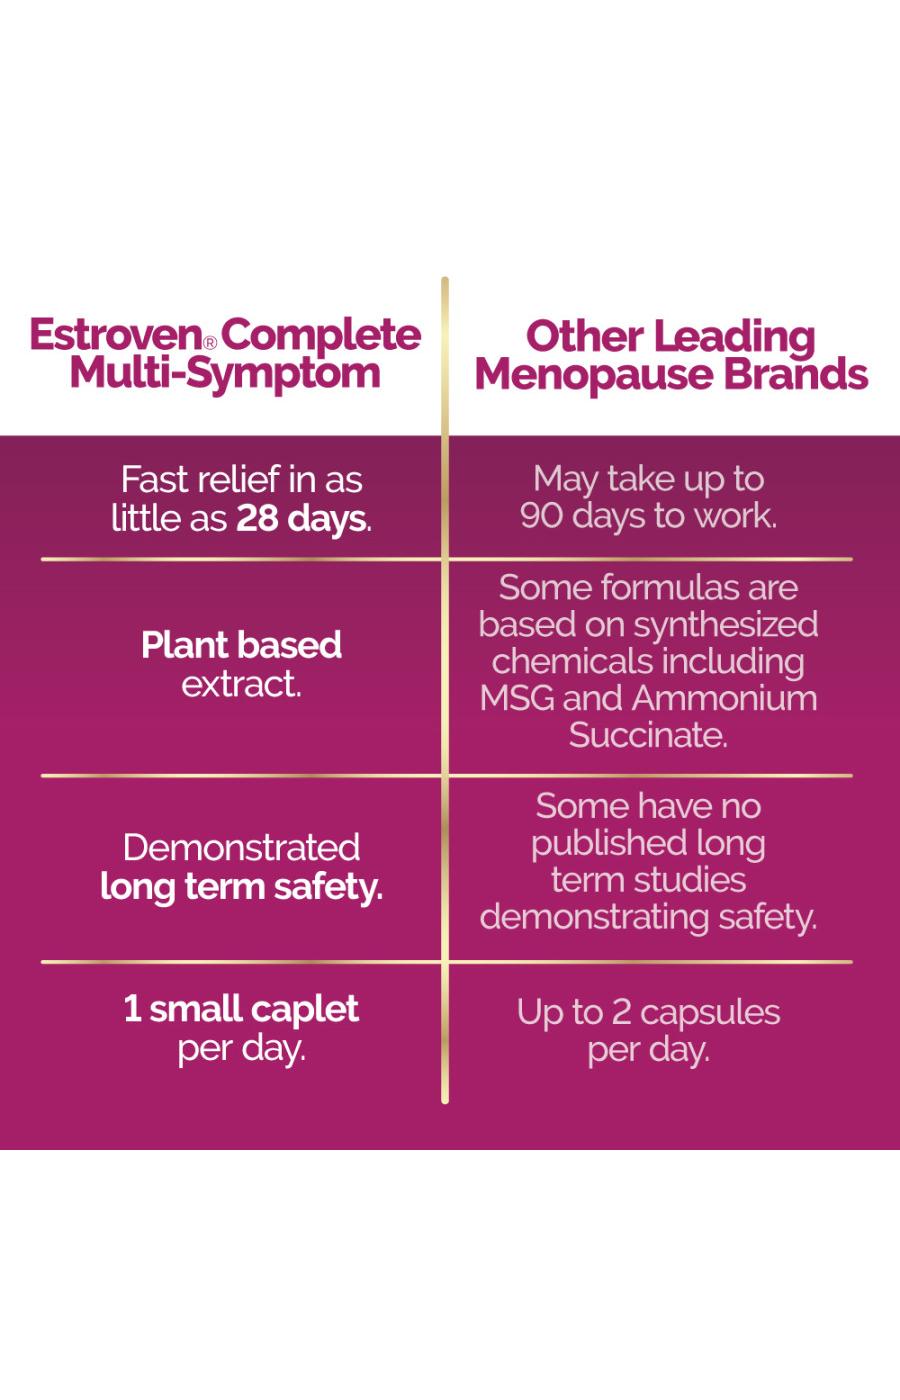 Estroven Complete Menopause Relief; image 4 of 4